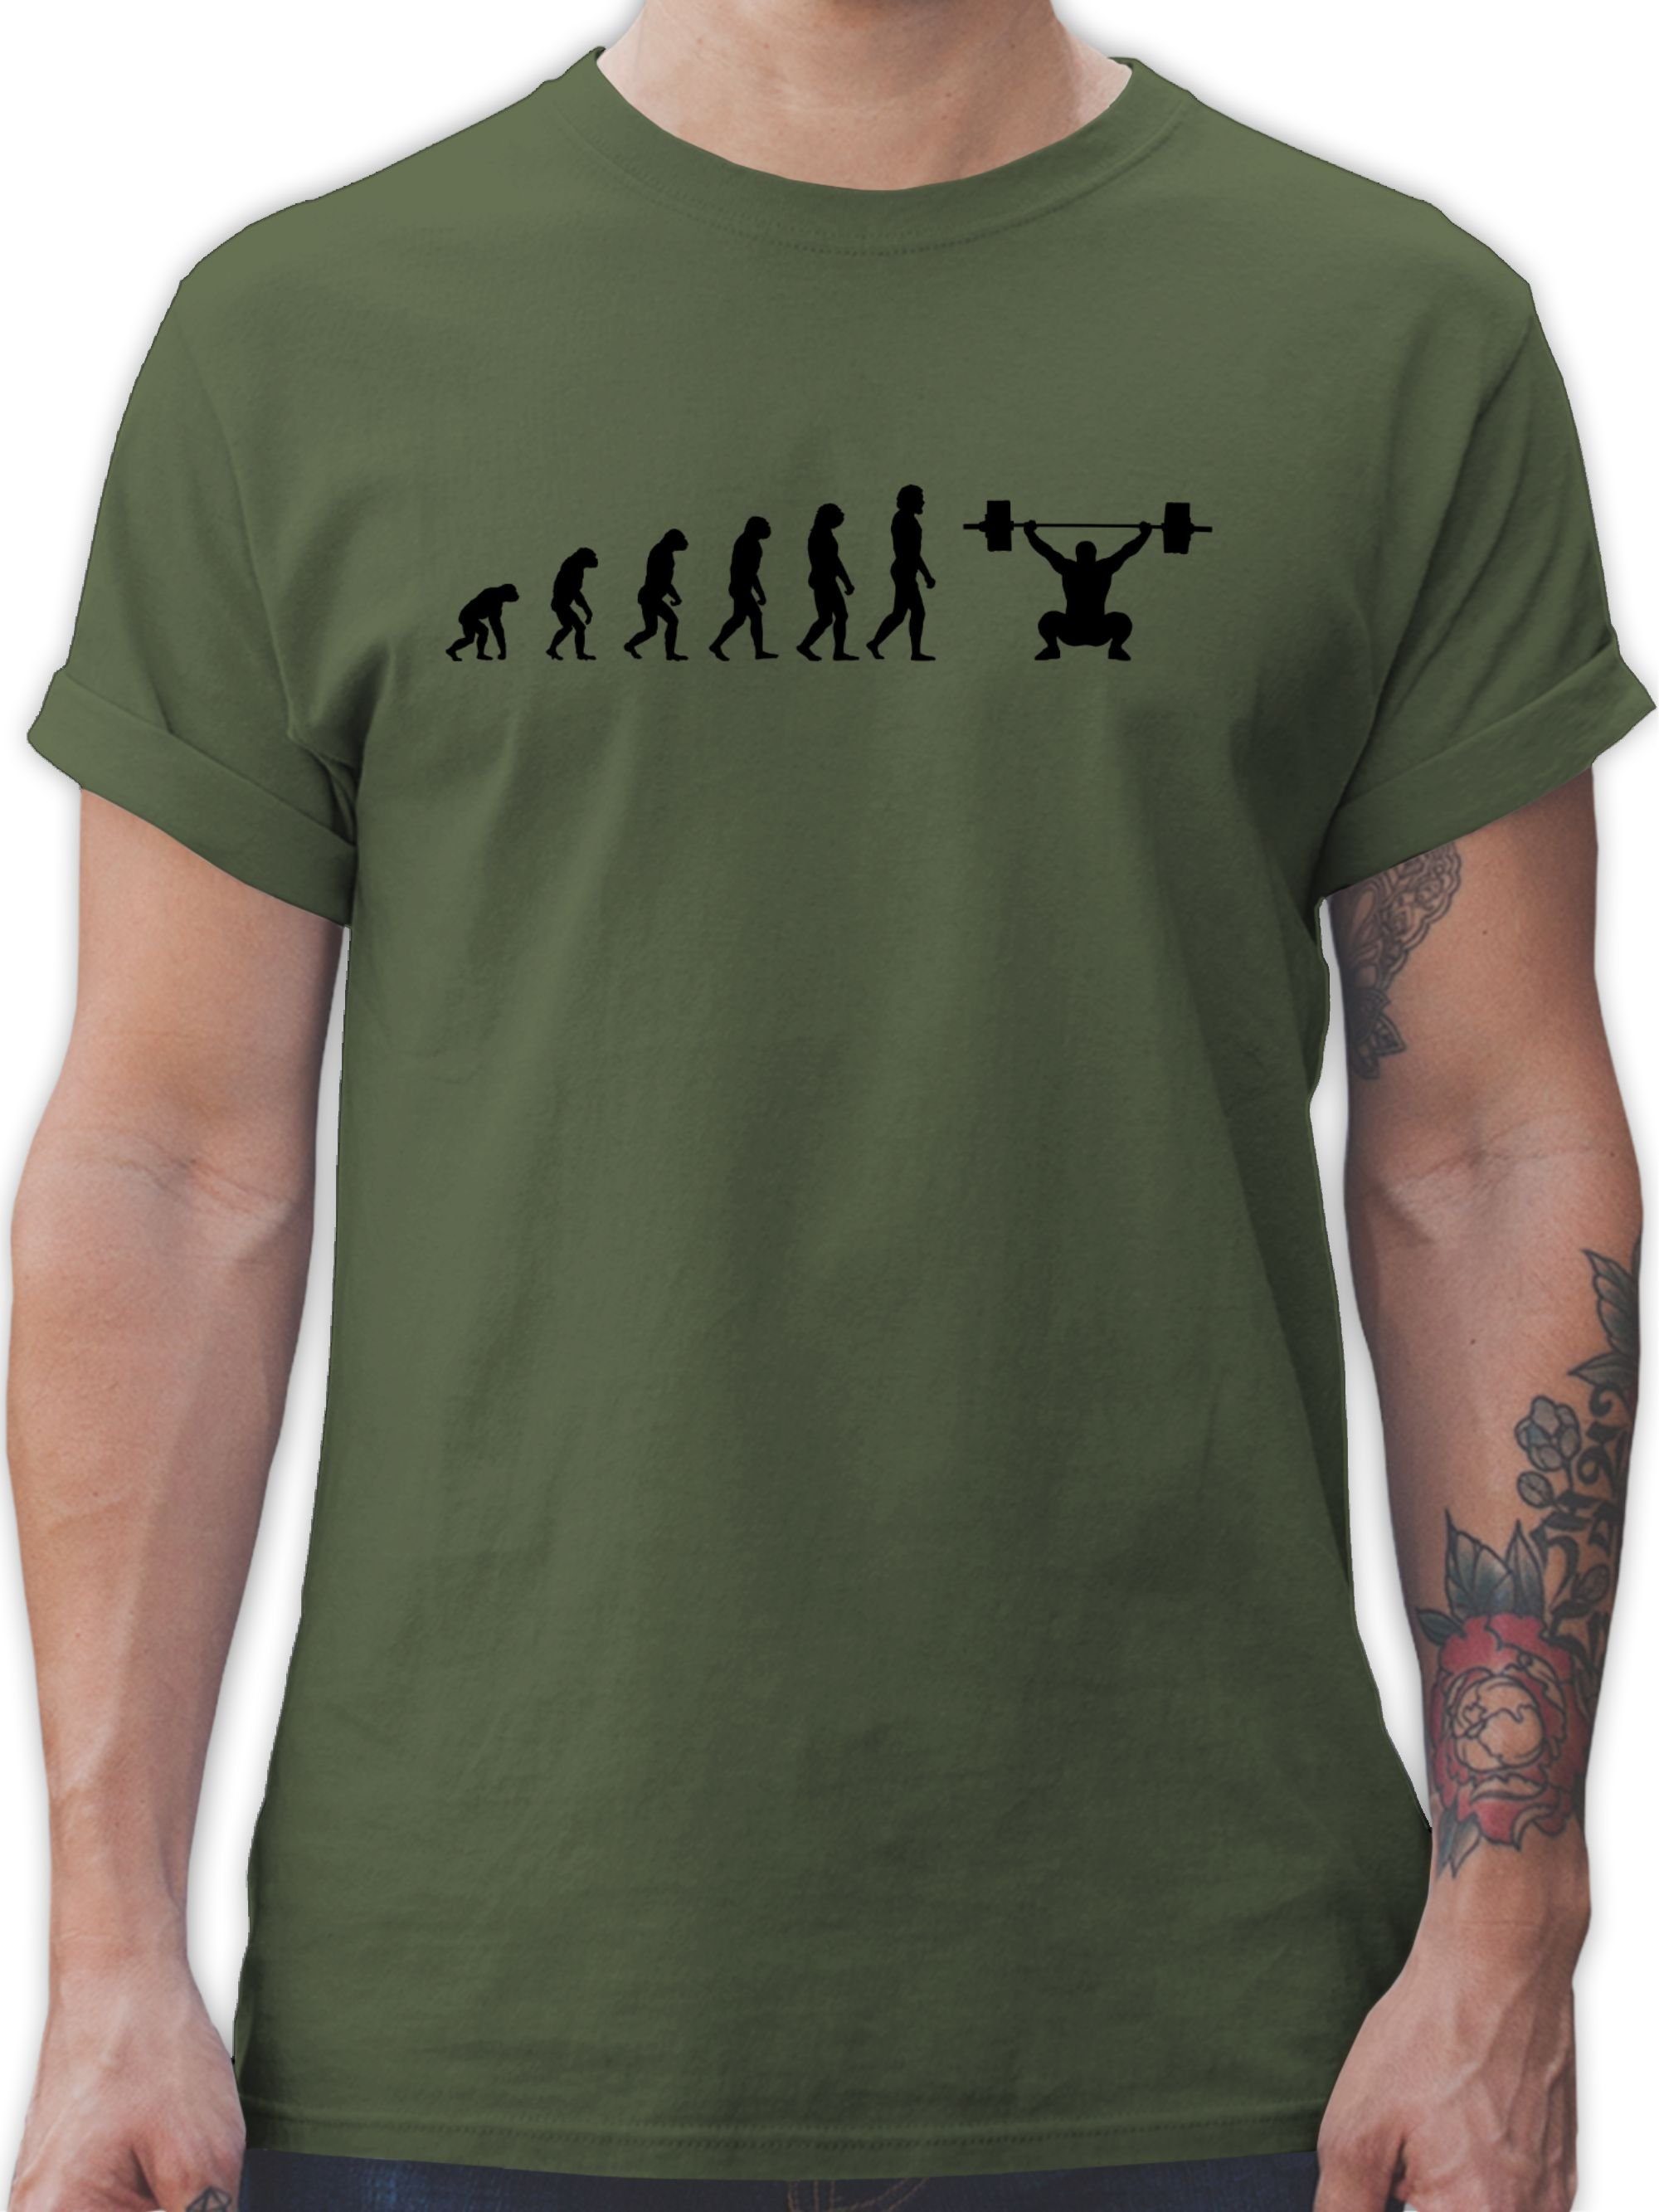 Shirtracer T-Shirt Evolution Workout Evolution Outfit 3 Army Grün